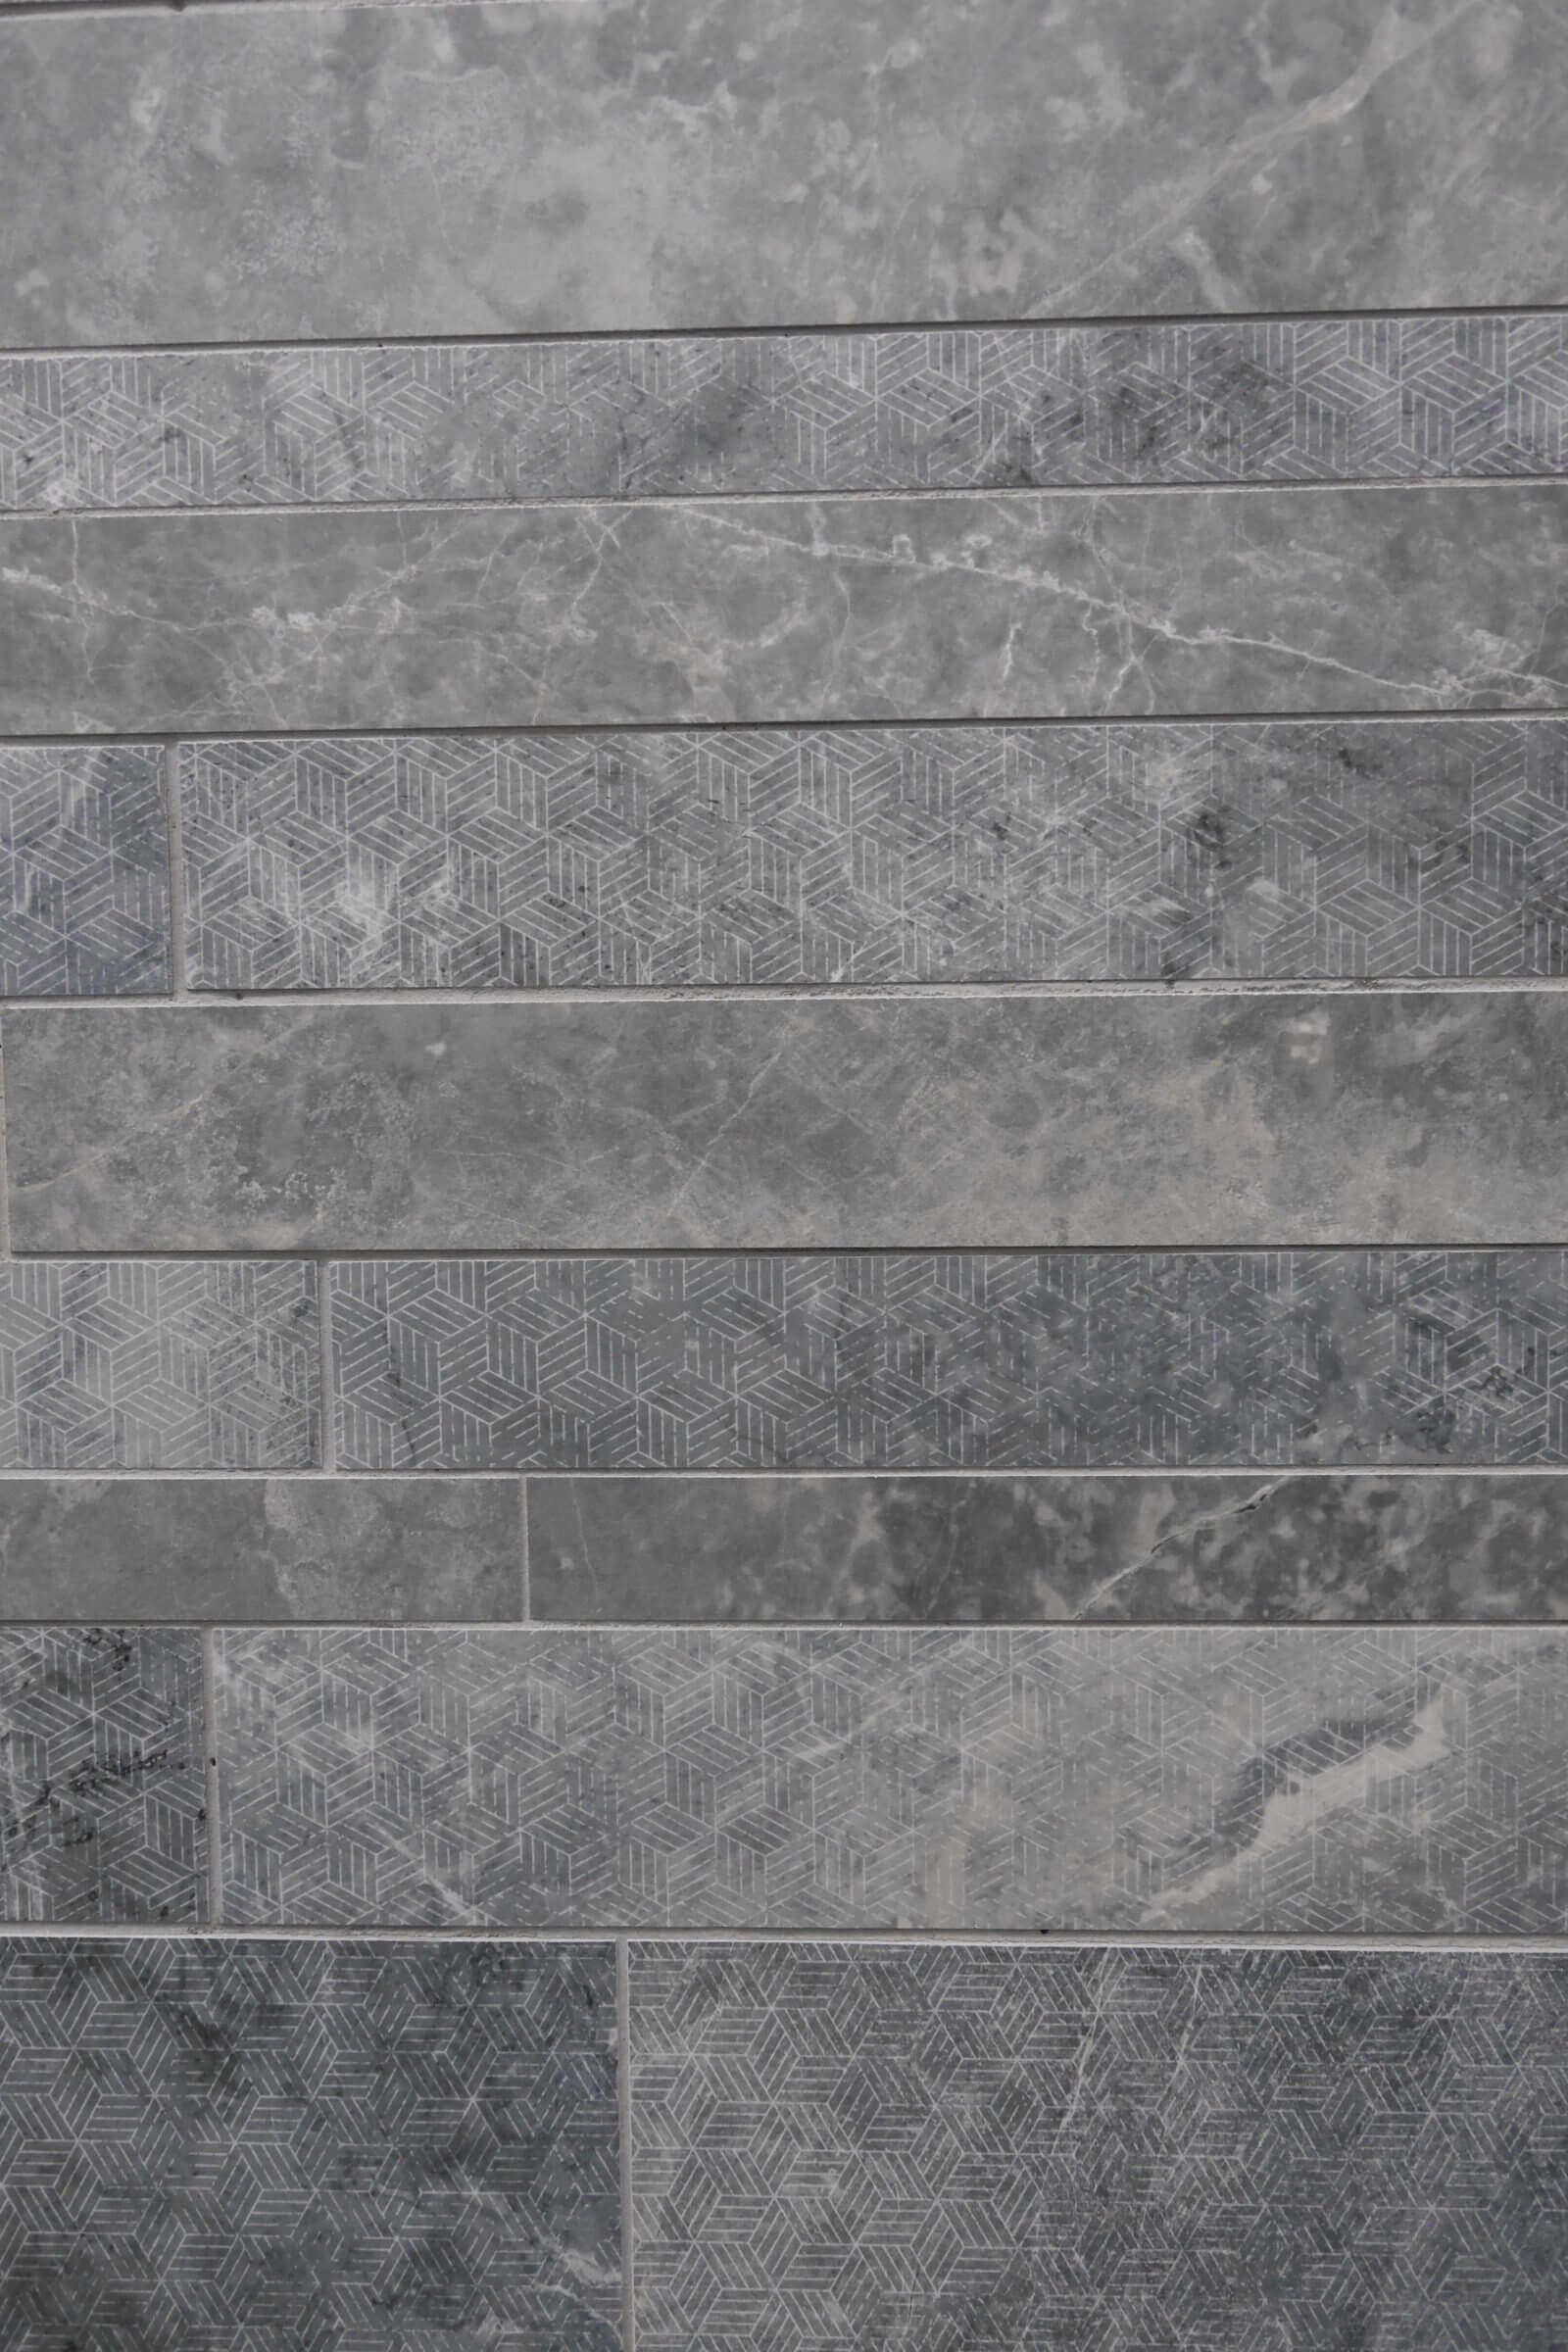 Skinny grey tile with geometric design